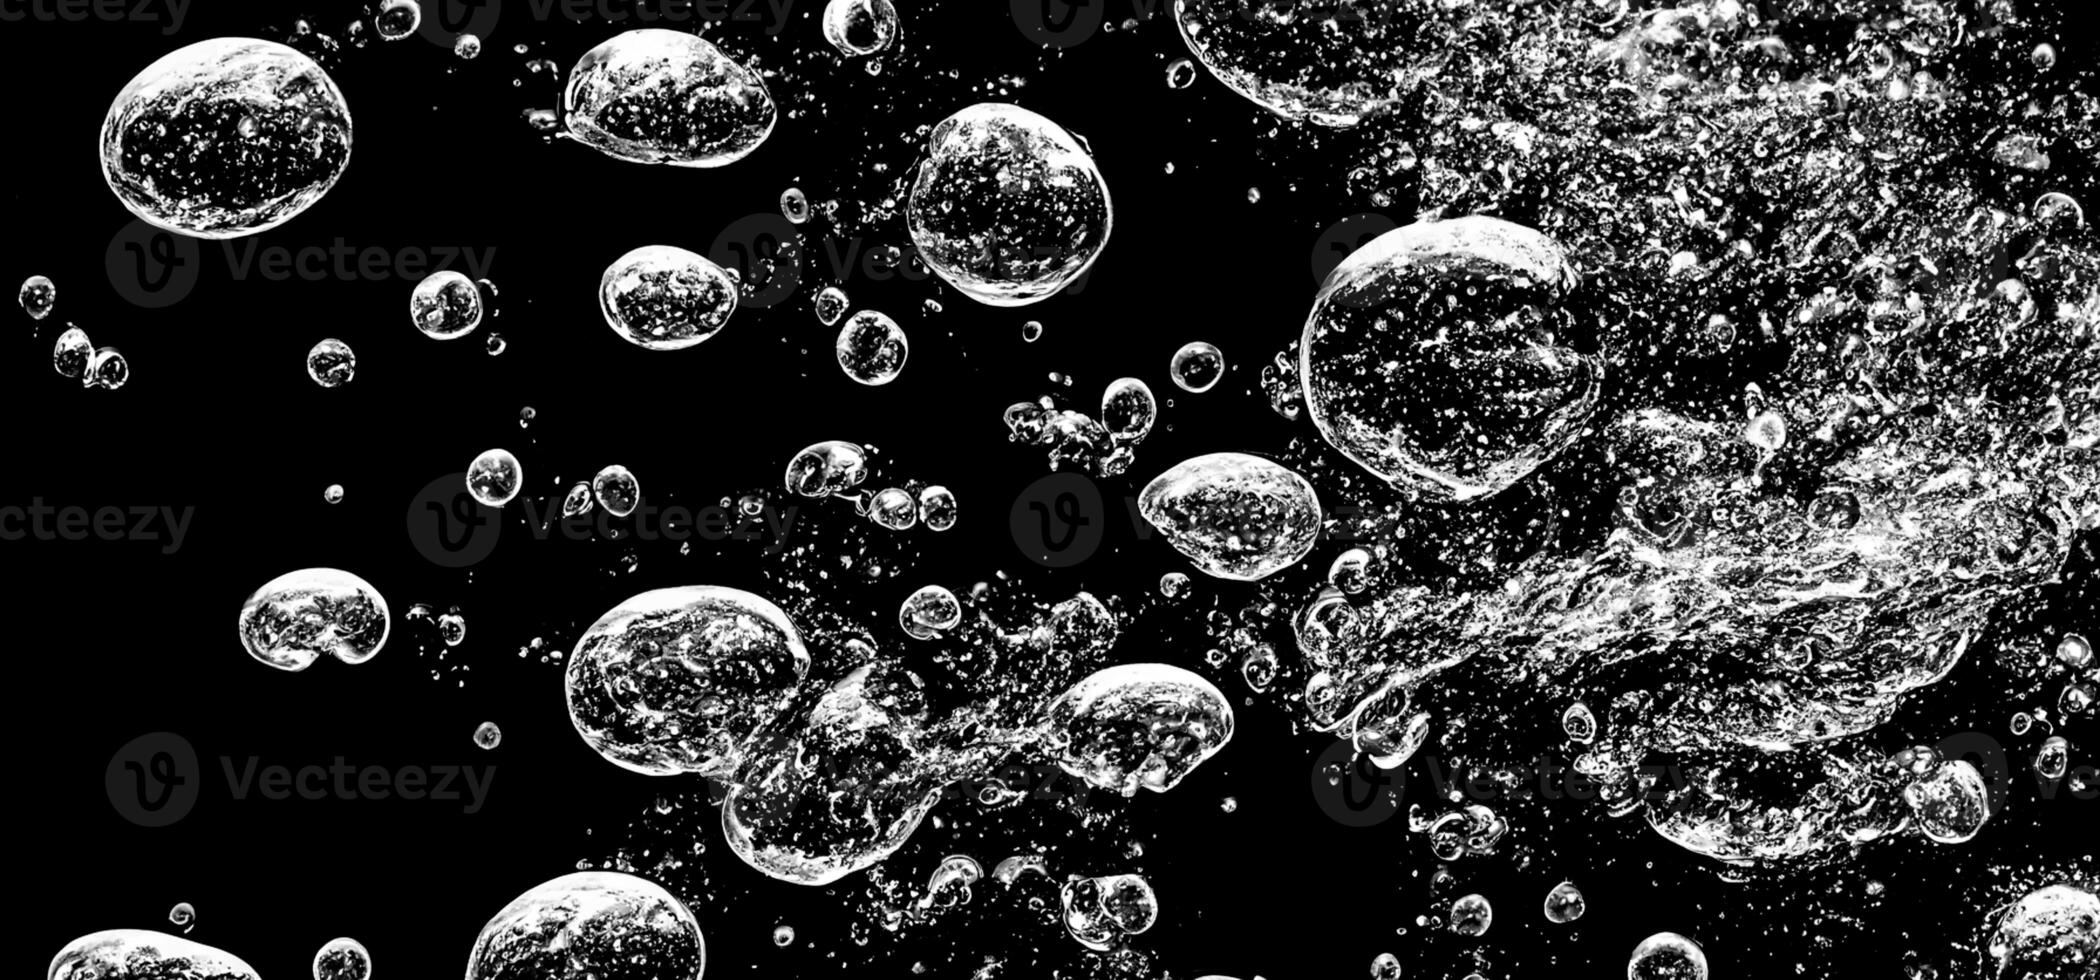 Frisdrank water bubbels spatten onderwater- tegen zwart achtergrond. foto